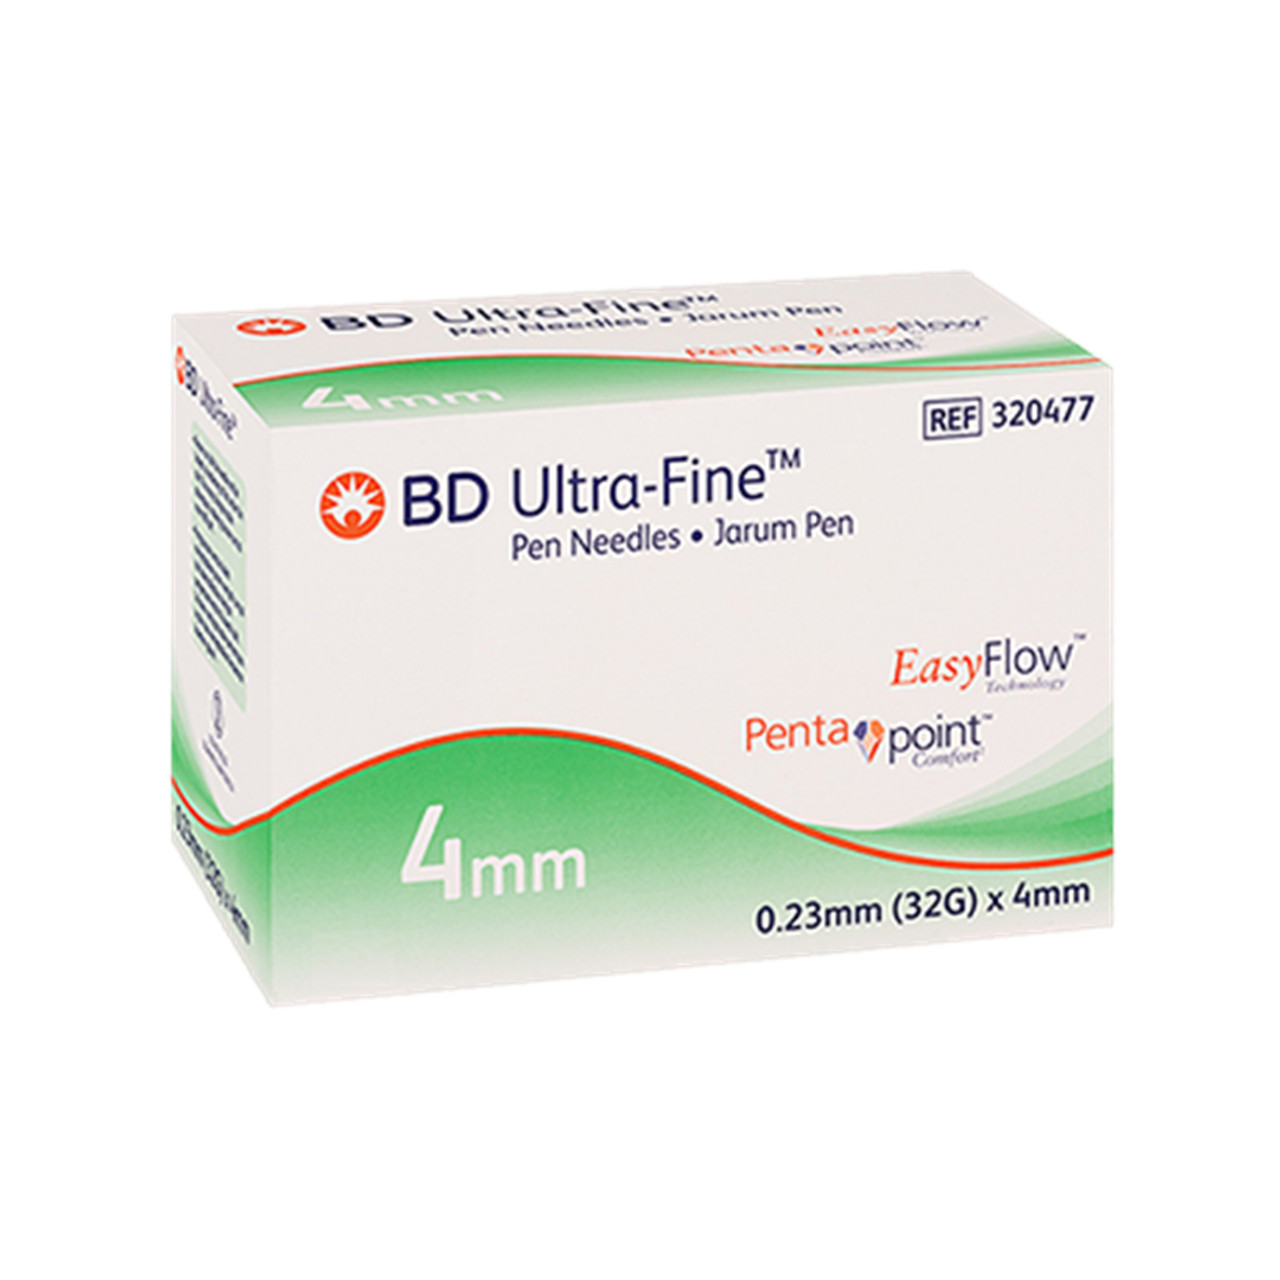 Buy BD Ultra-Fine Nano Pen Needle at Medical Monks!